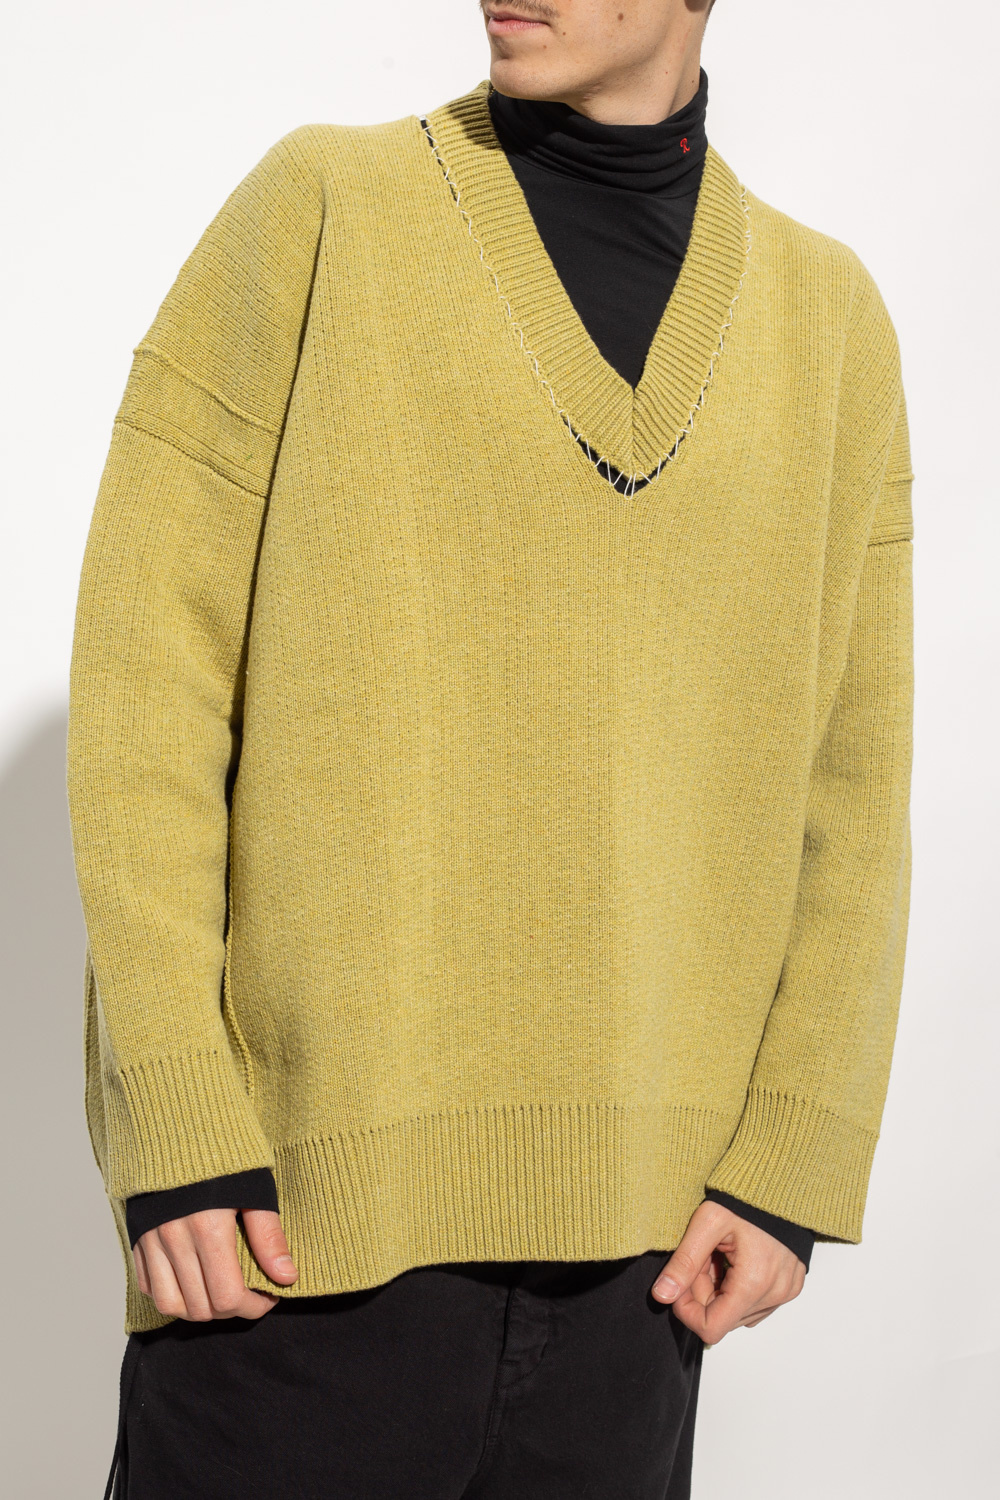 Green Oversize sweater Raf Simons - Anti-odor finish helps keep